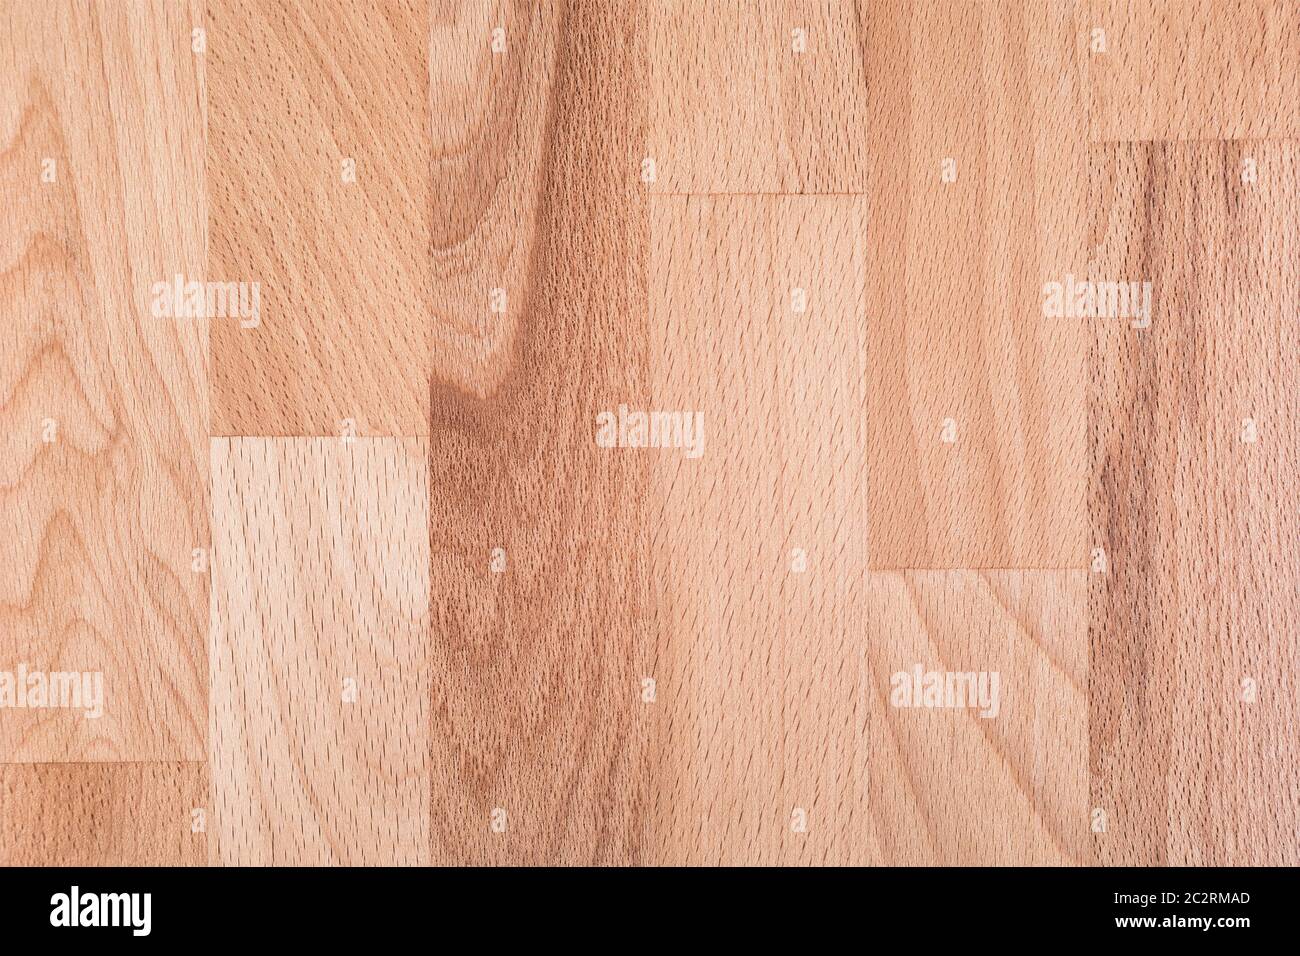 Beech wood texture Stock Photo